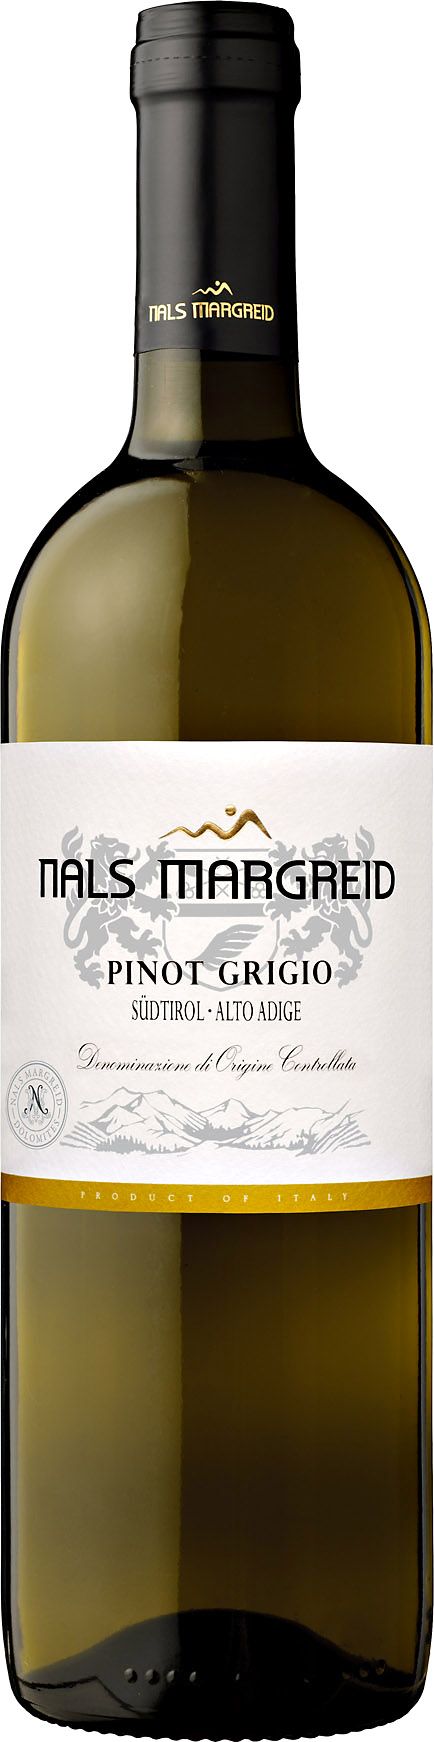 Nals Margreid, Pinot Grigio, 2015